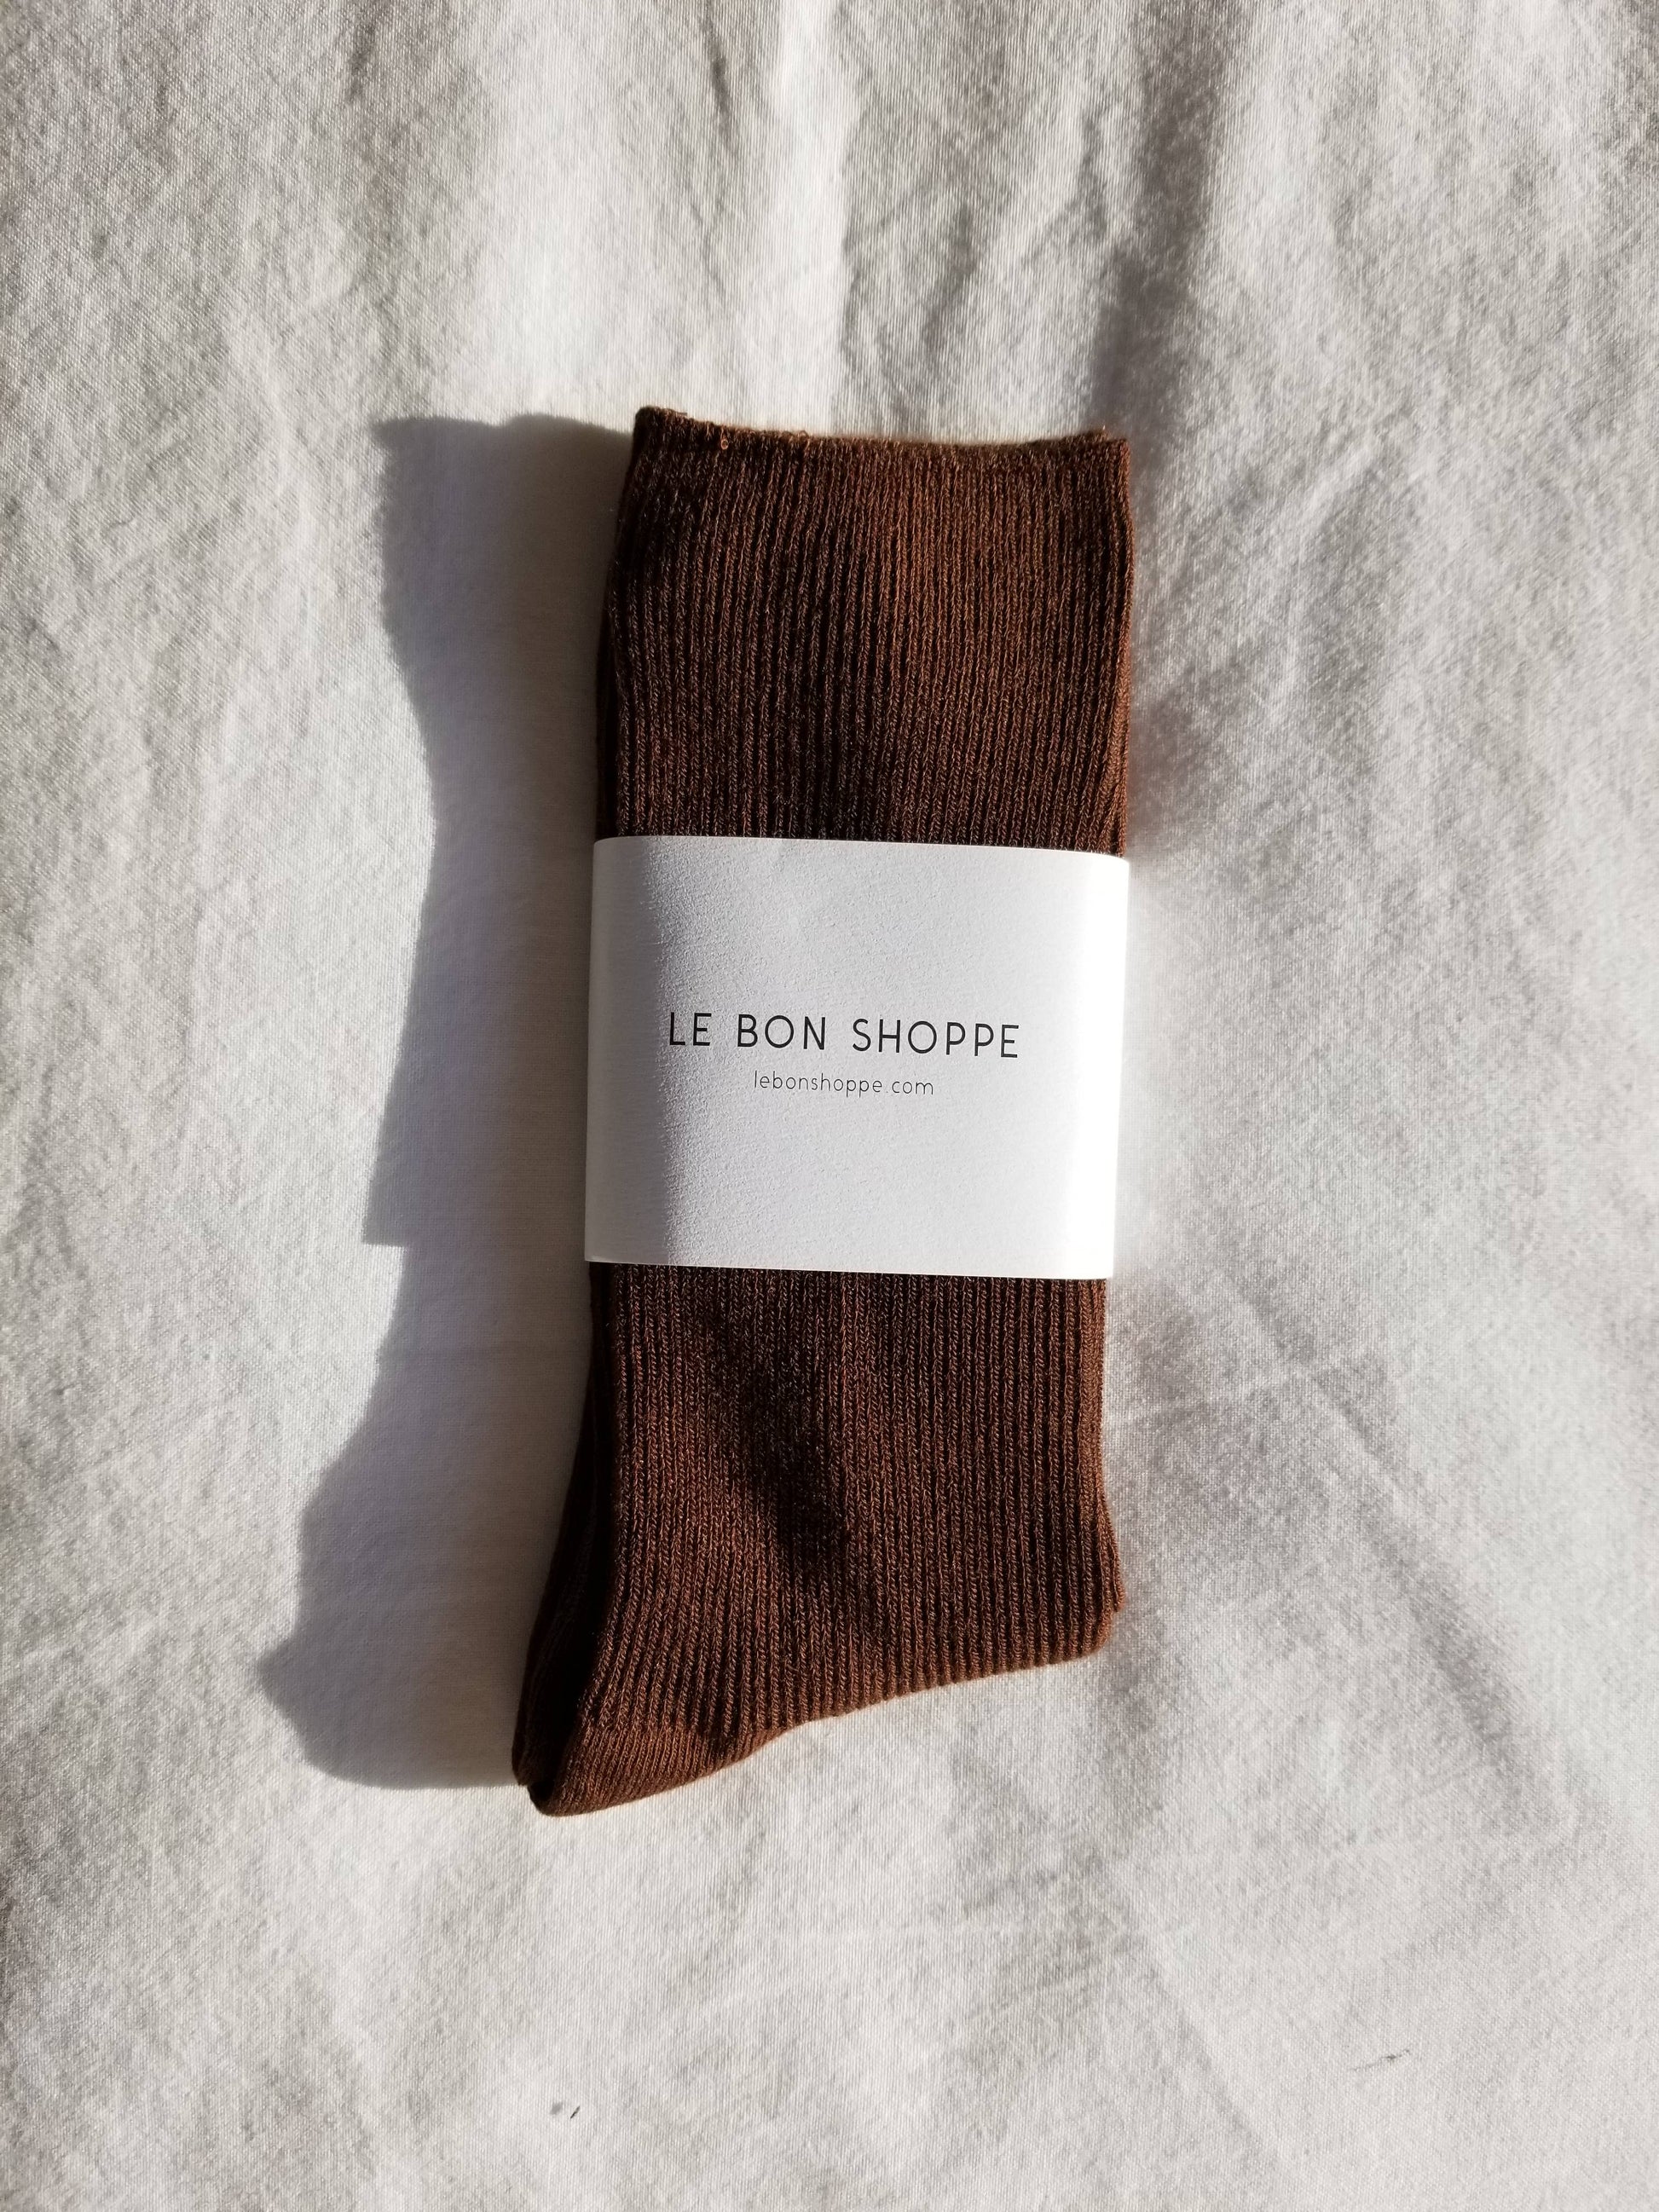 Trouser Socks: Dijon - The Crowd Went Wild